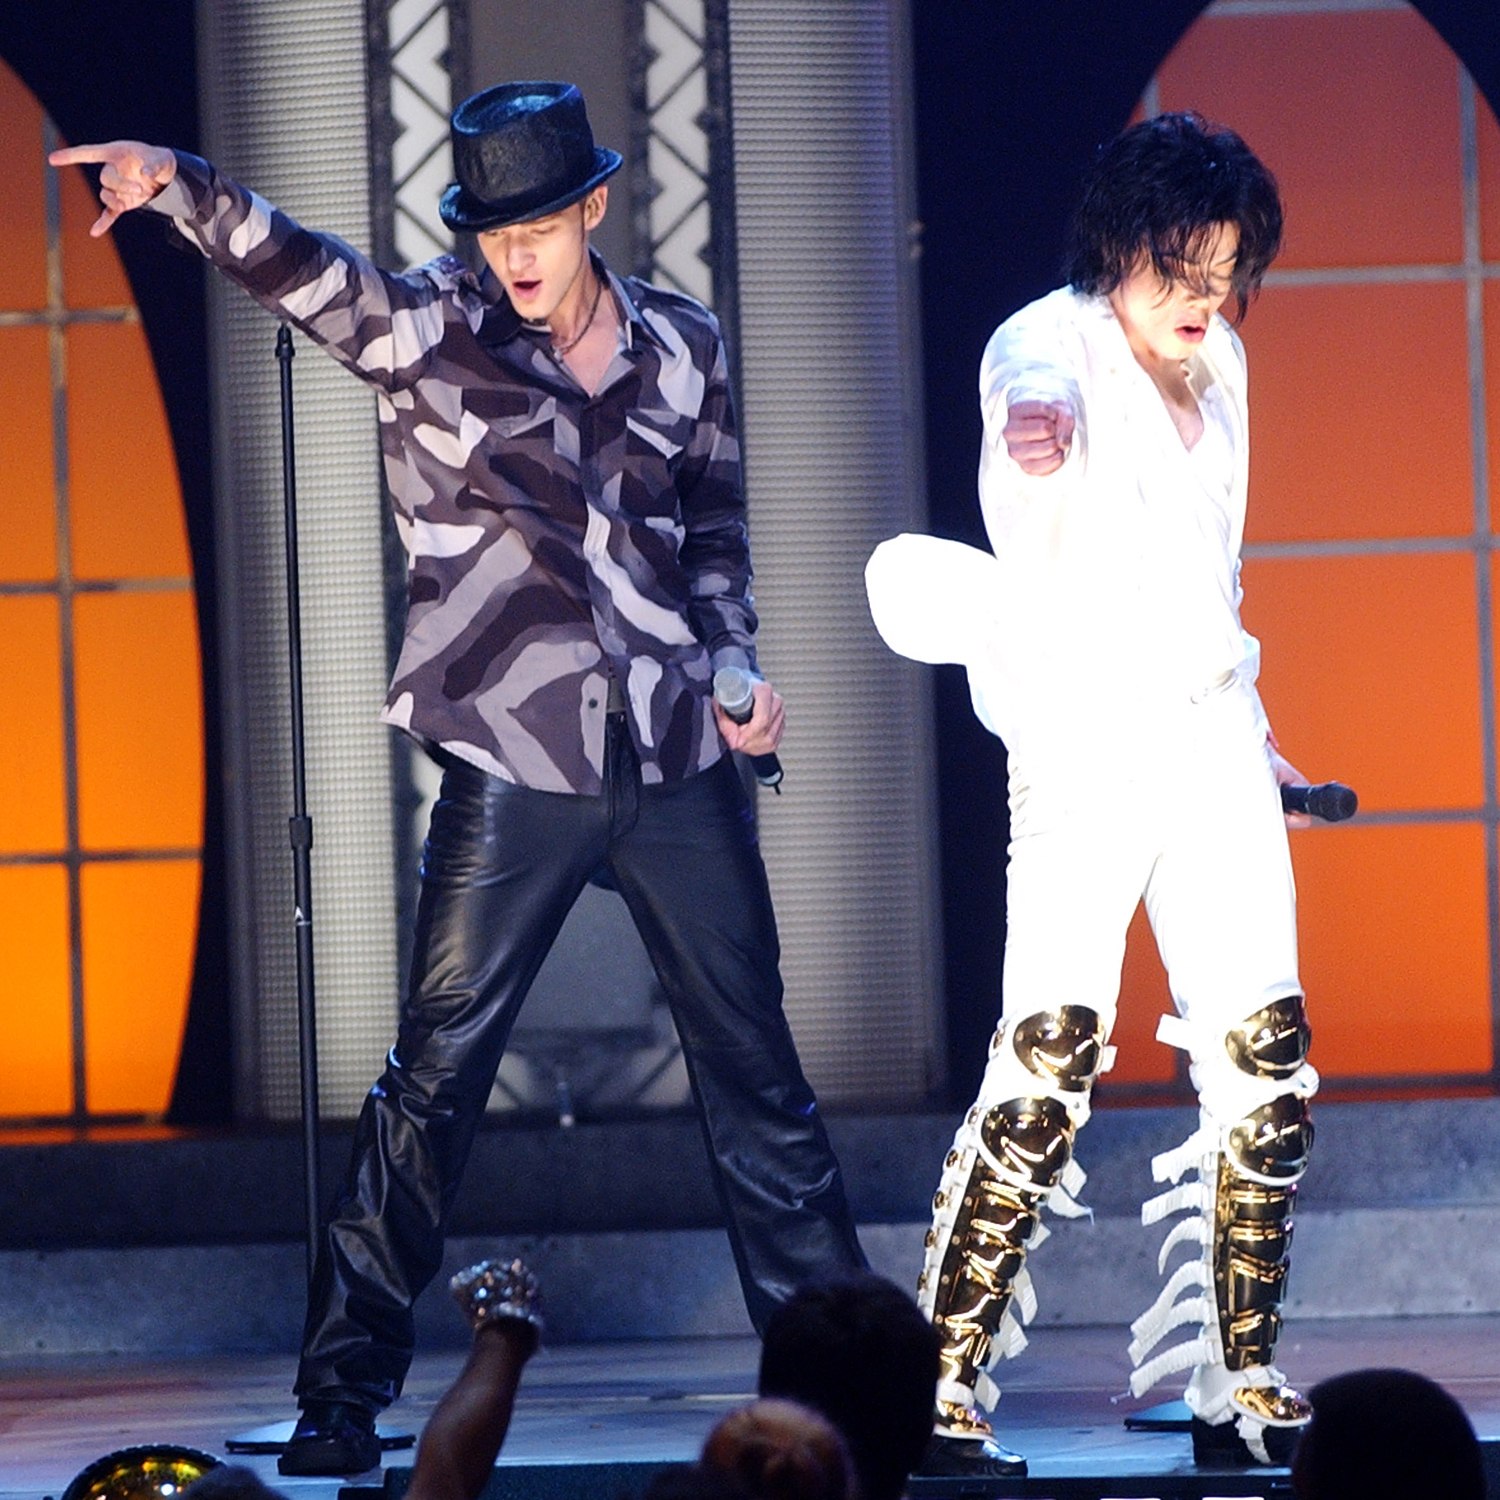 The Stylist LA: Michael Jackson's Influence on Style